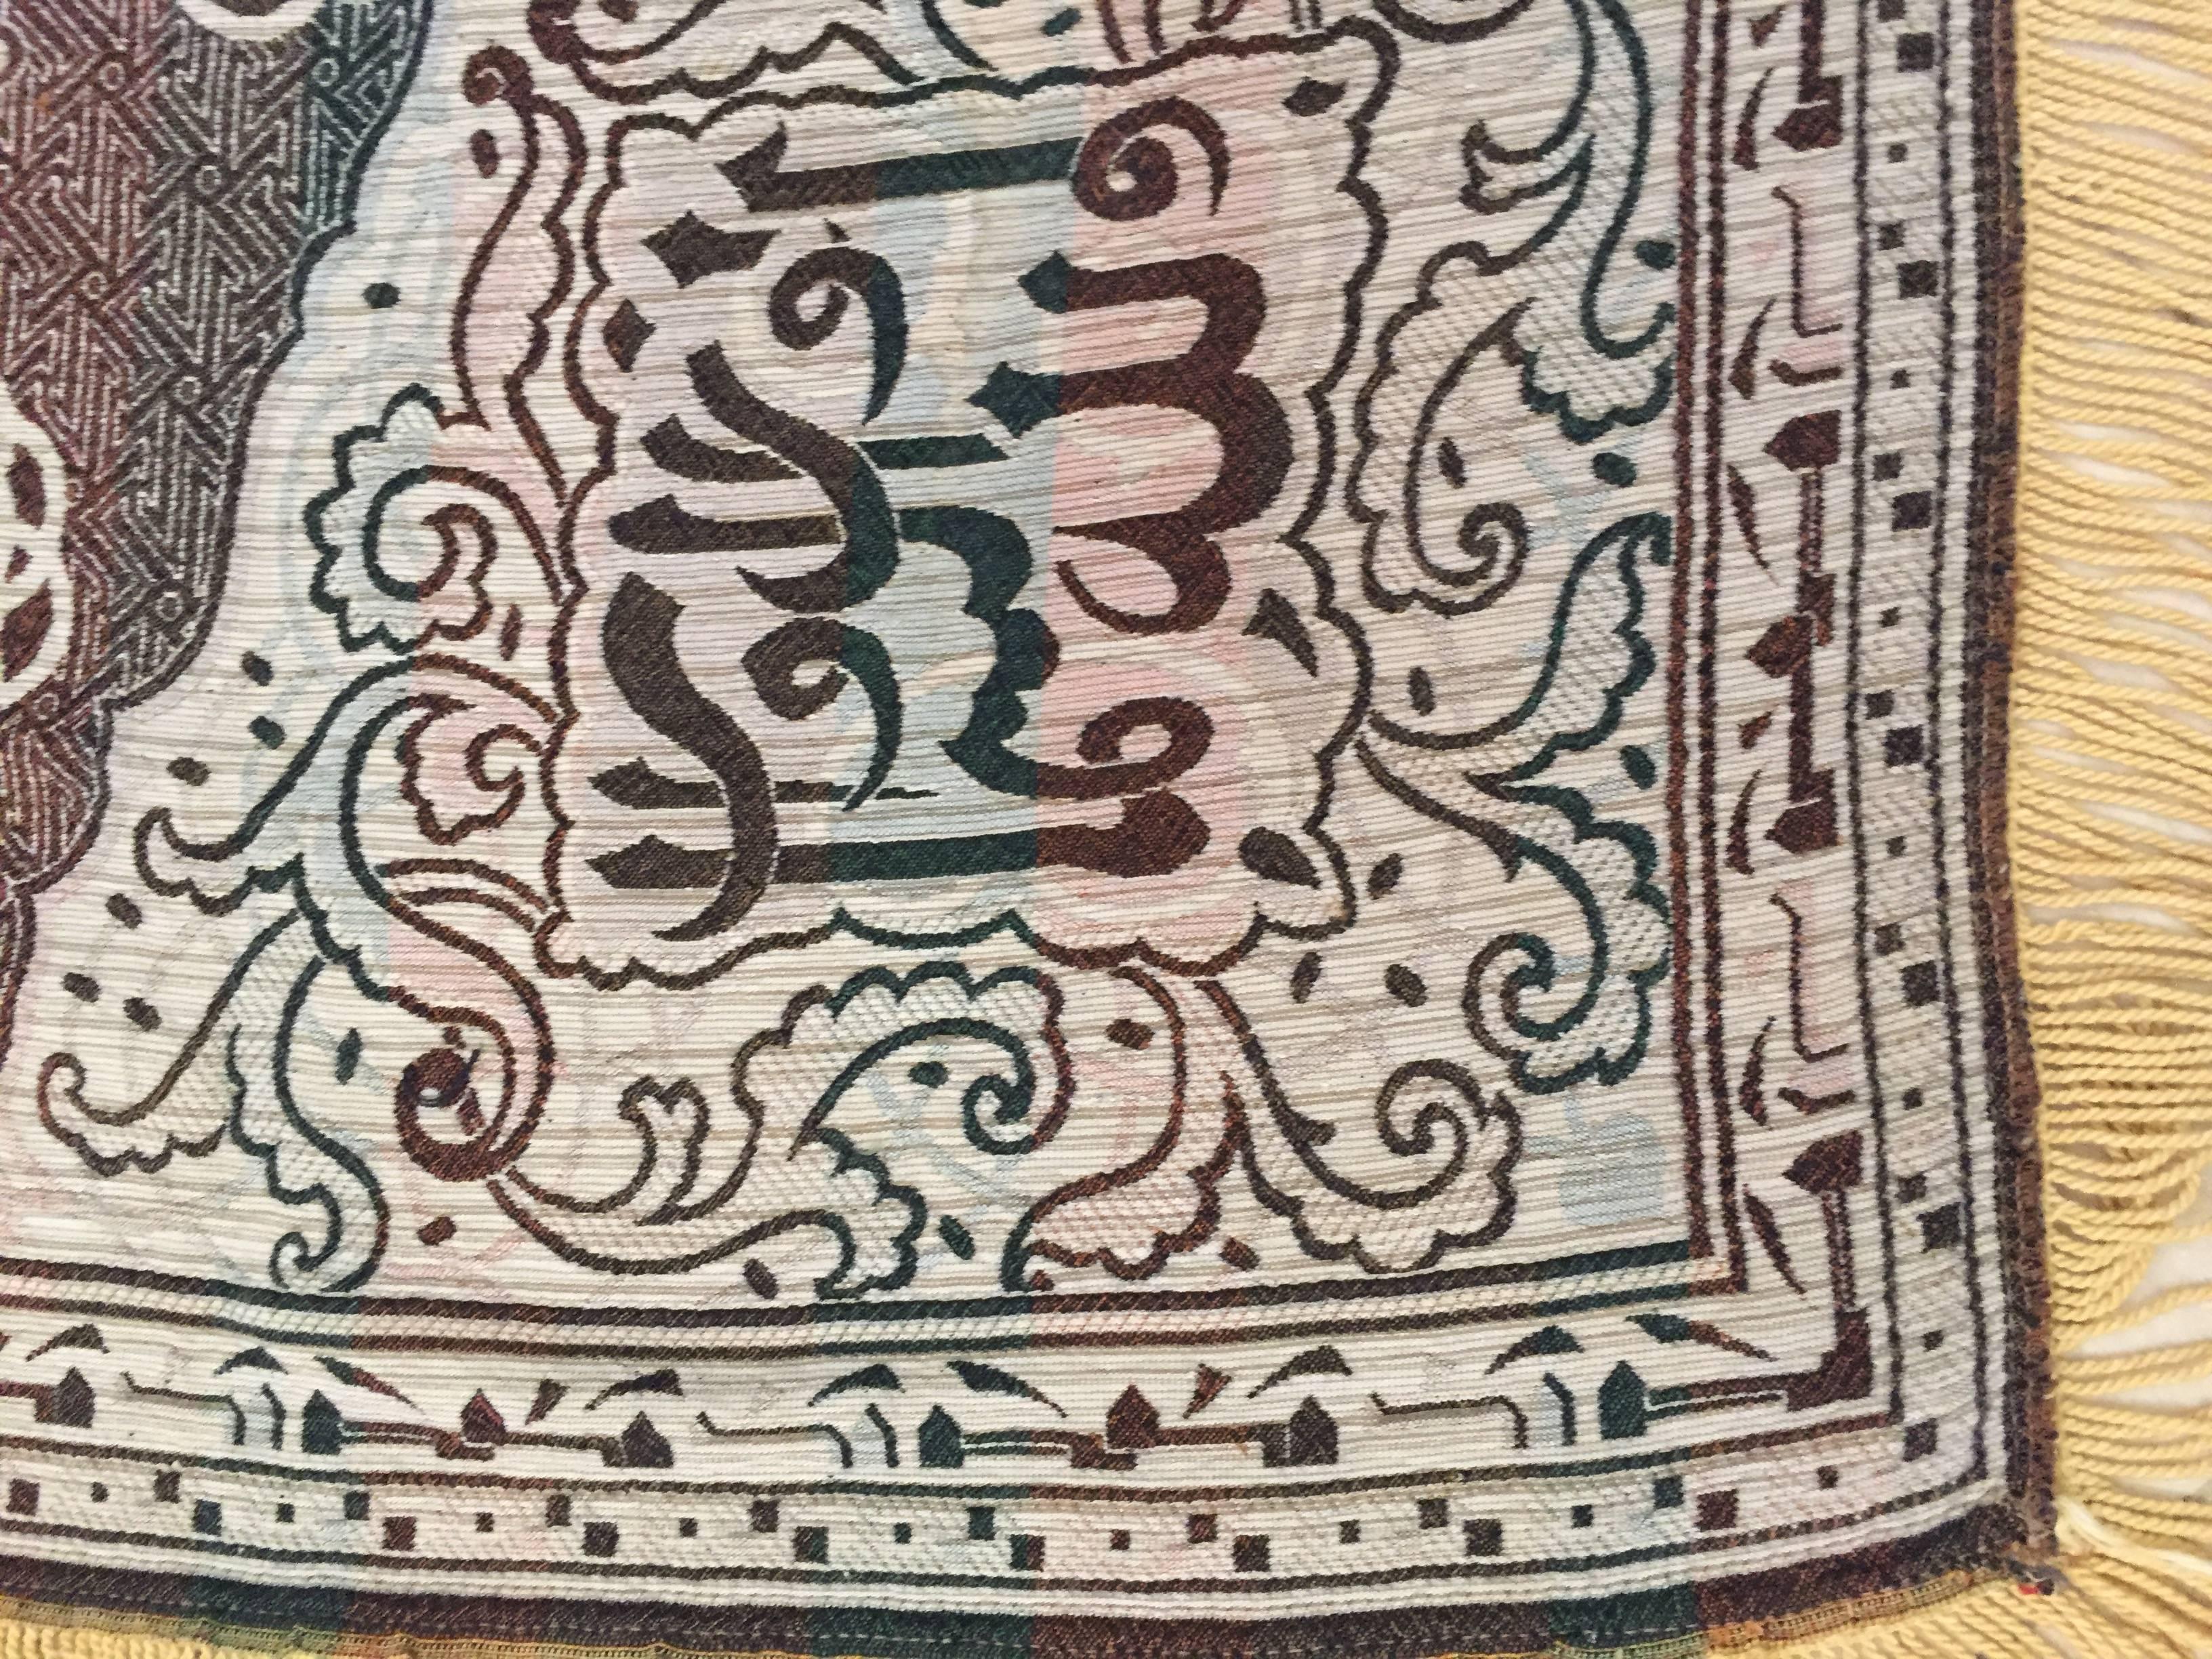 Granada Islamic Spain Textile with Moorish Calligraphy Writing 5